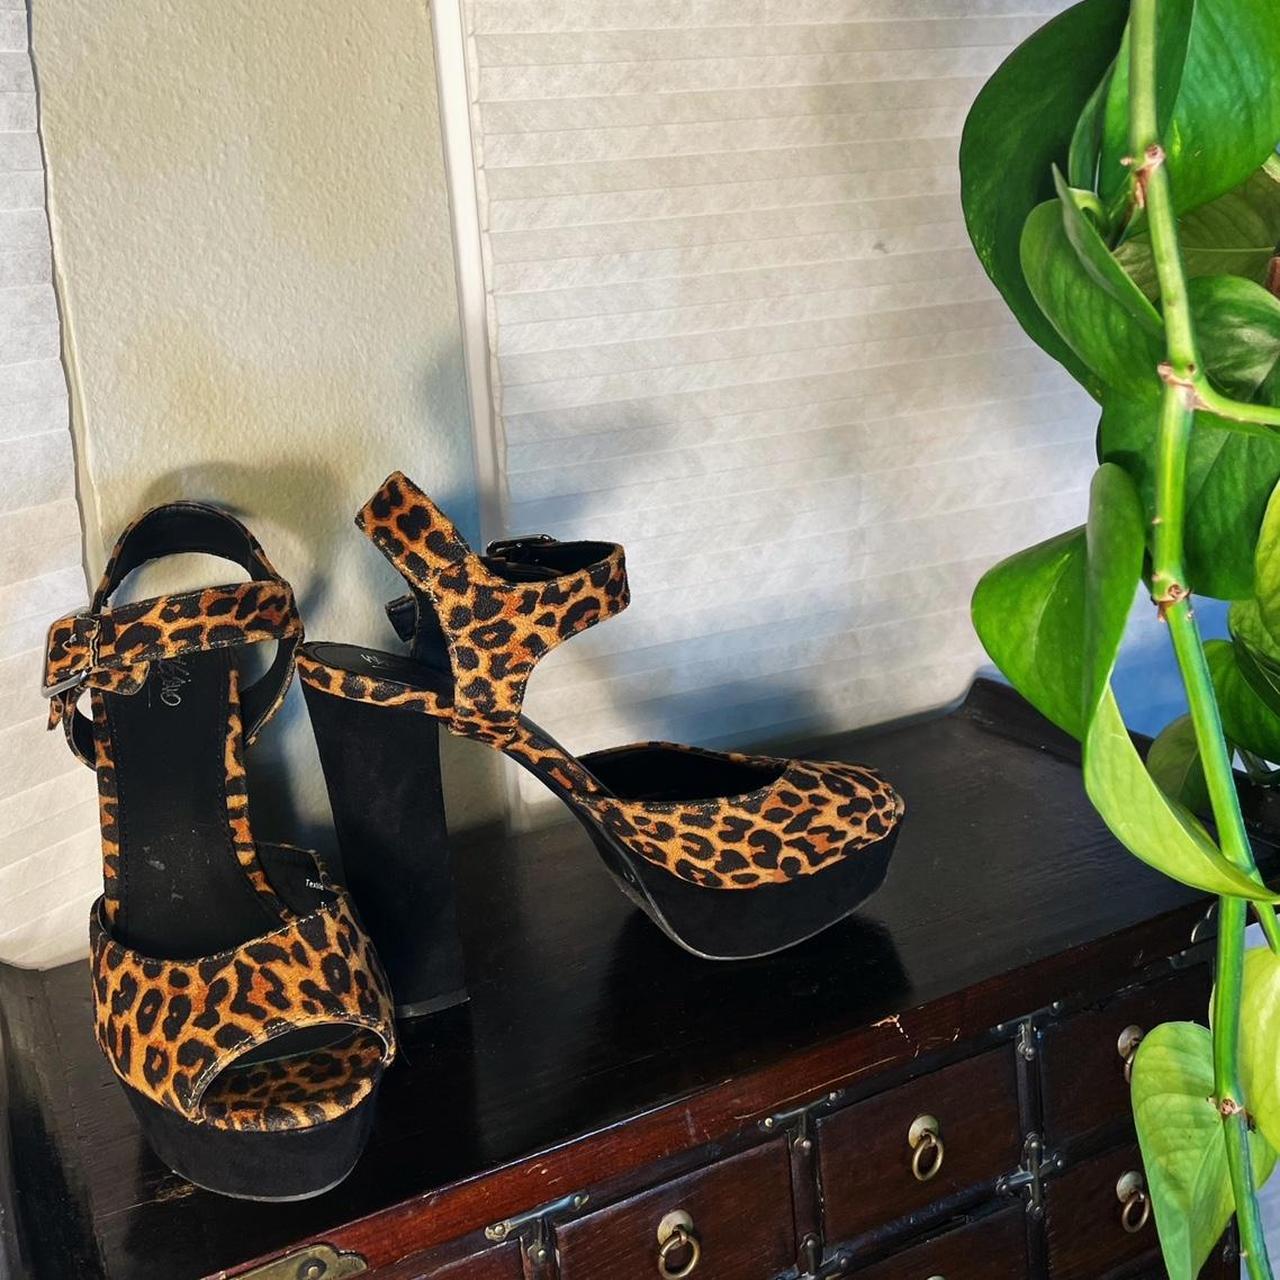 Mossimo cheetah print platform peep toe high heels